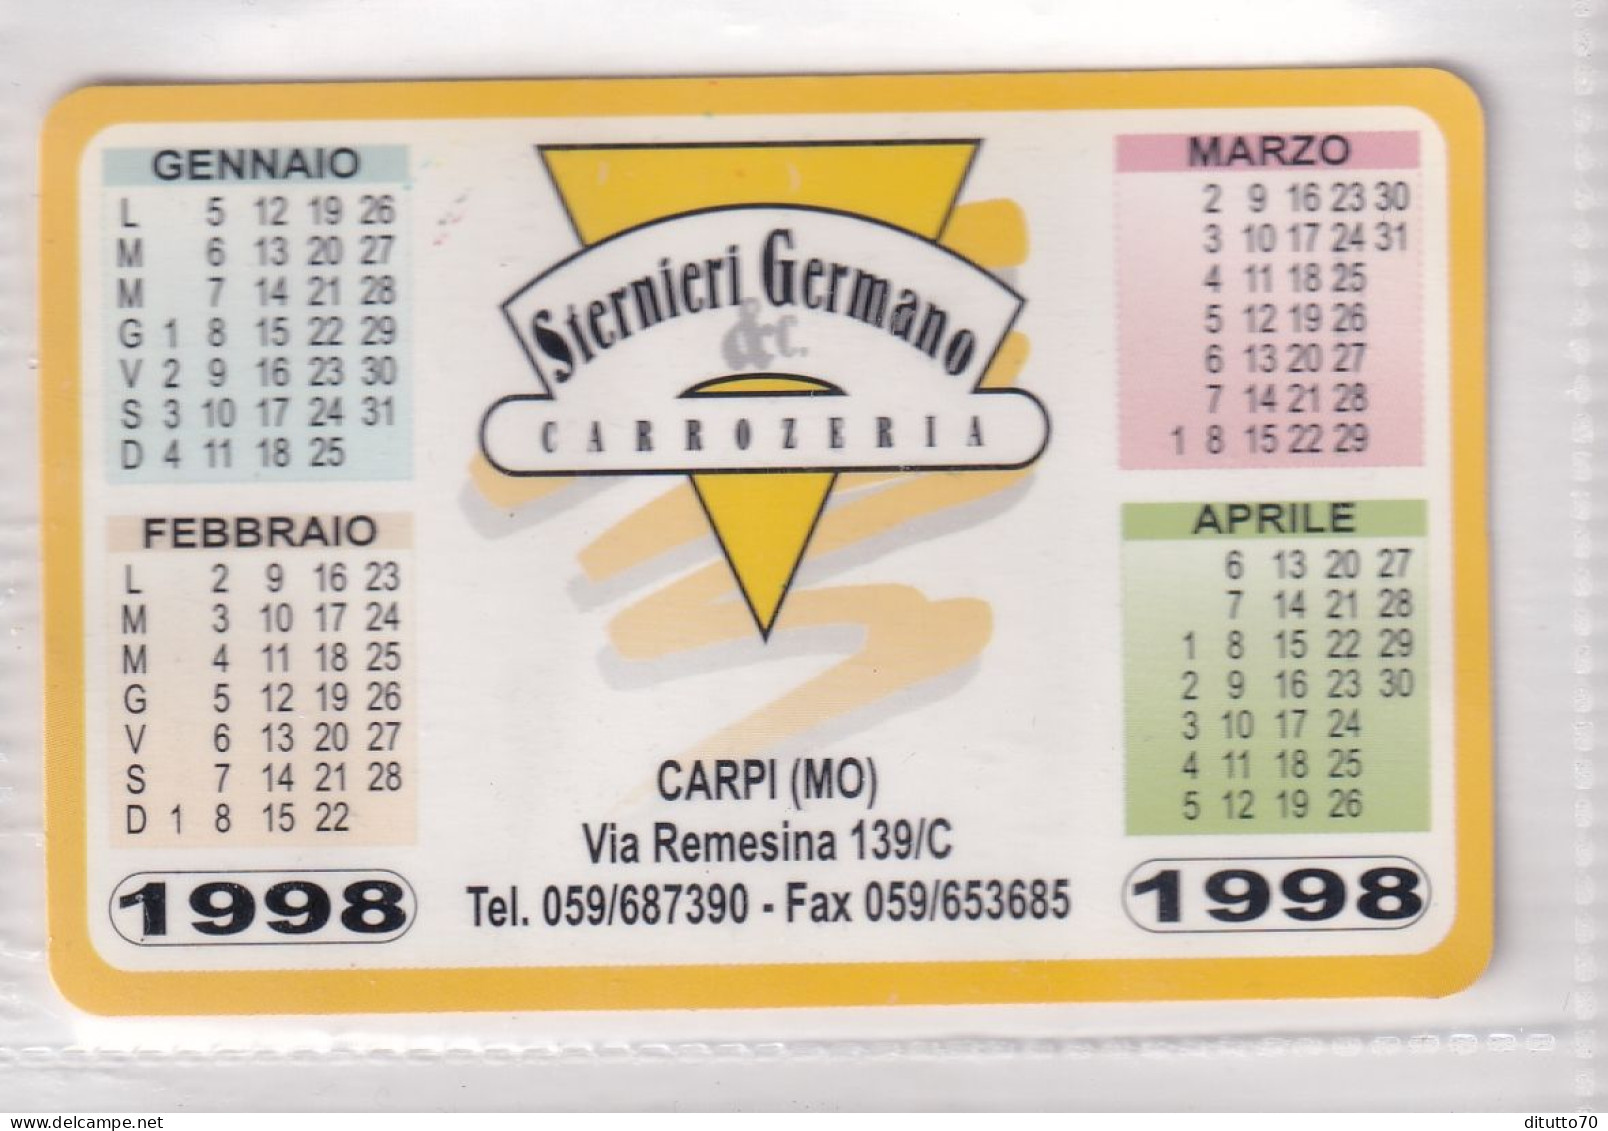 Calendarietto - Carrozzeria - Siernieri Ermano - Carpi - Modena - Anno 1998 - Kleinformat : 1991-00